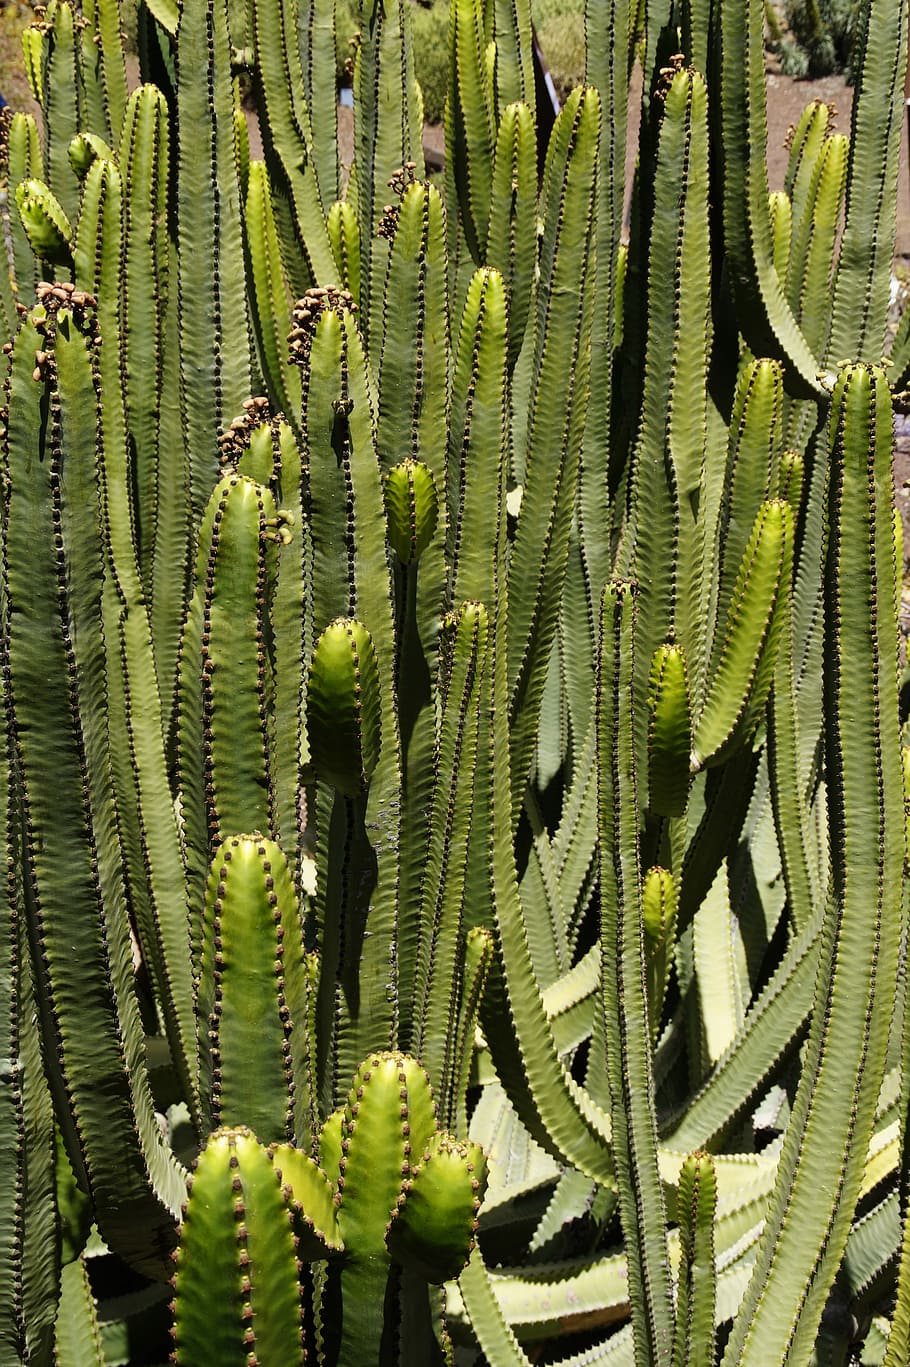 Spurge Family, Plant, spurge, euphorbia canariensis, canarian spurge, similar to cacti, tenerife, toxic, euphorbia, cardon canario